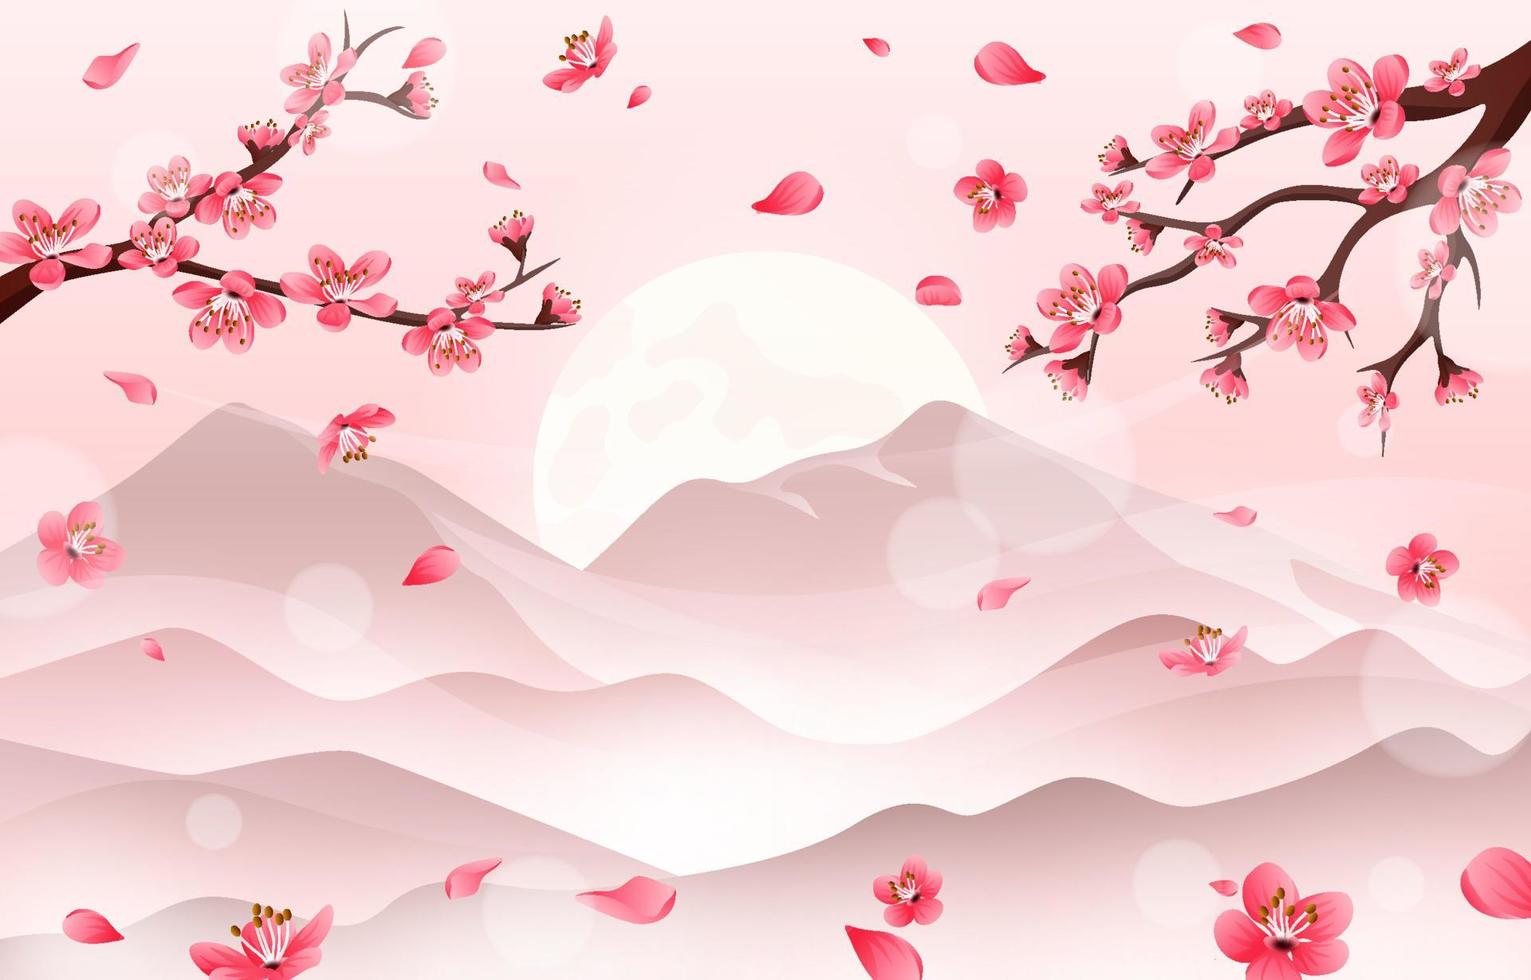 persika blomma i de berg begrepp bakgrund vektor